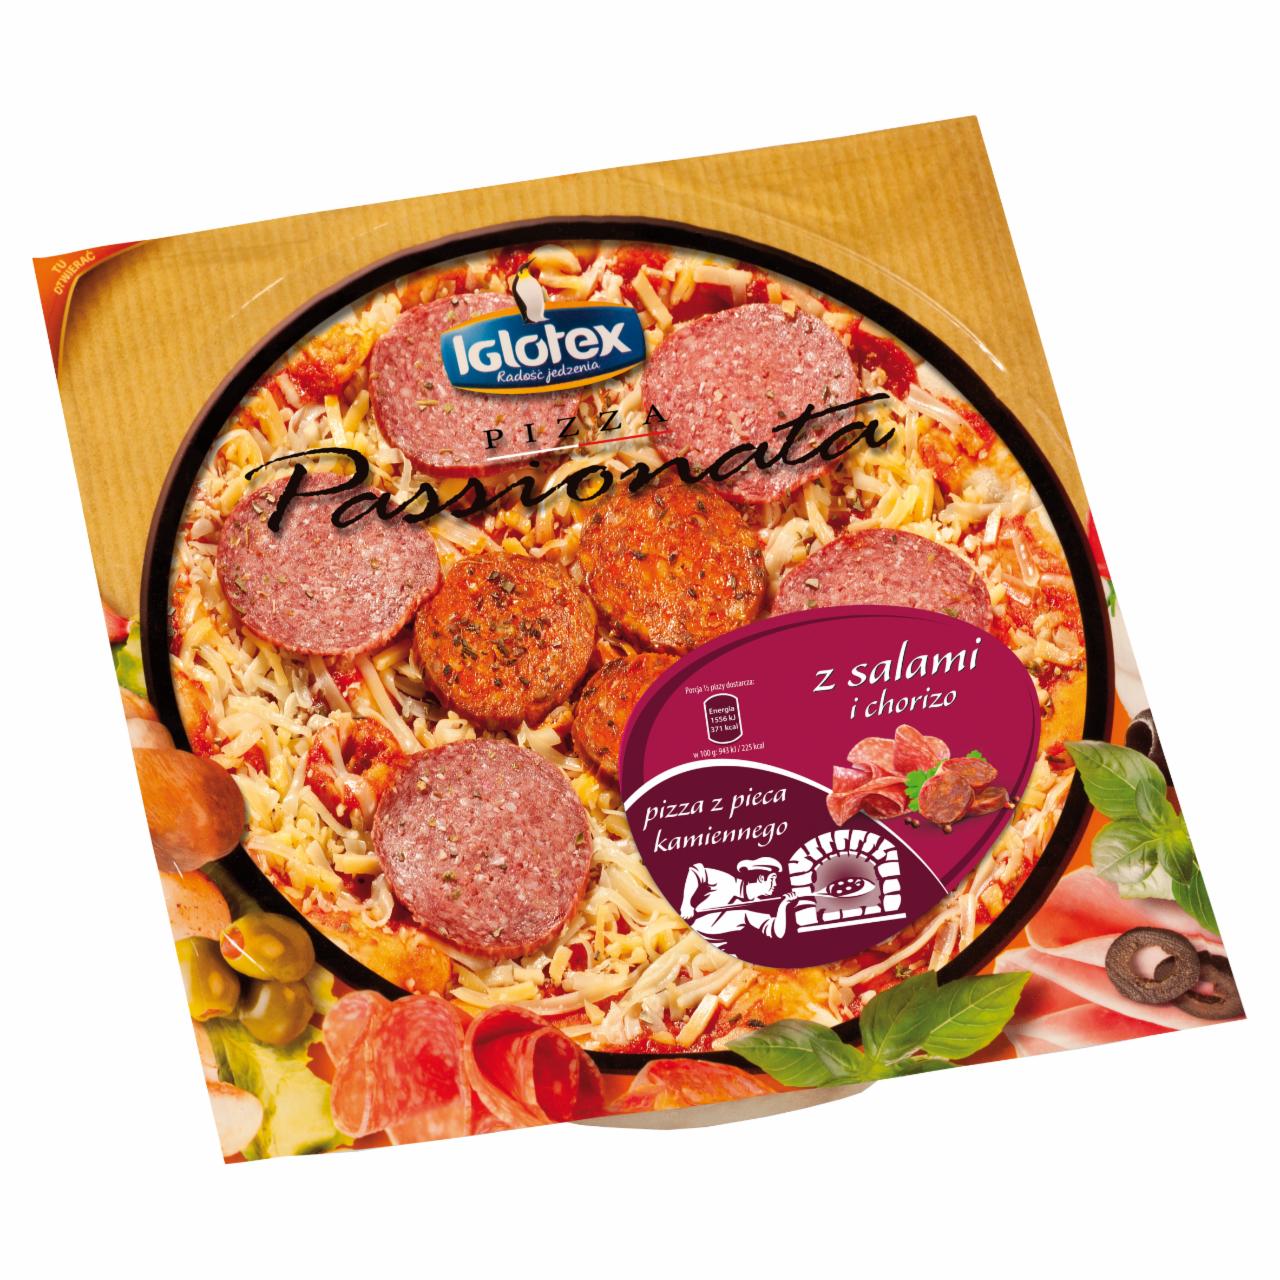 Zdjęcia - Iglotex Passionata Pizza z salami i chorizo 330 g